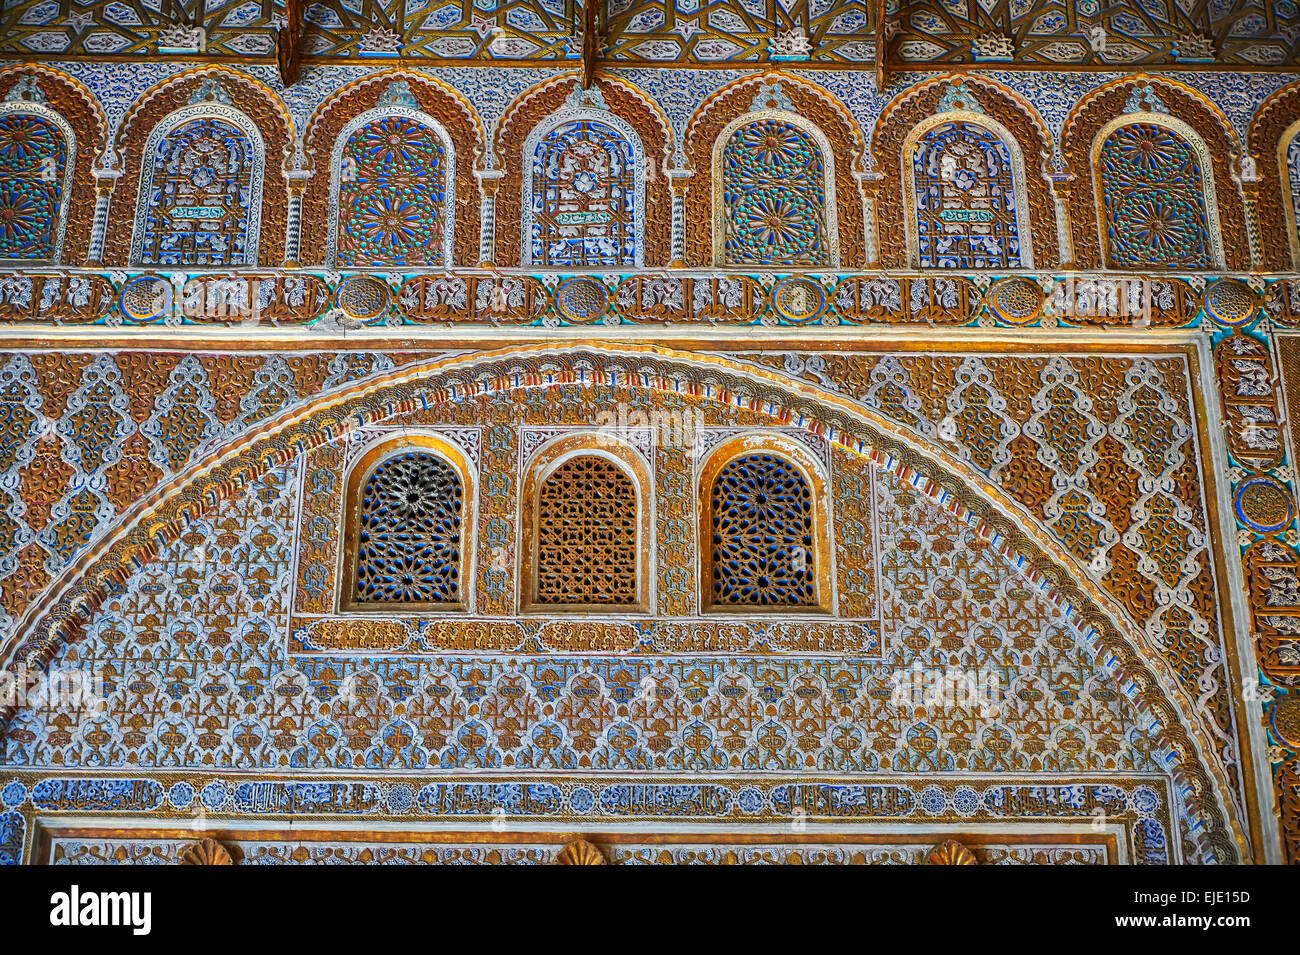 Arabesque Mudjar plasterwork of the 12th century Salón de Embajadores (Ambassadors' Hall ). Alcazar of Seville, Spain Stock Photo